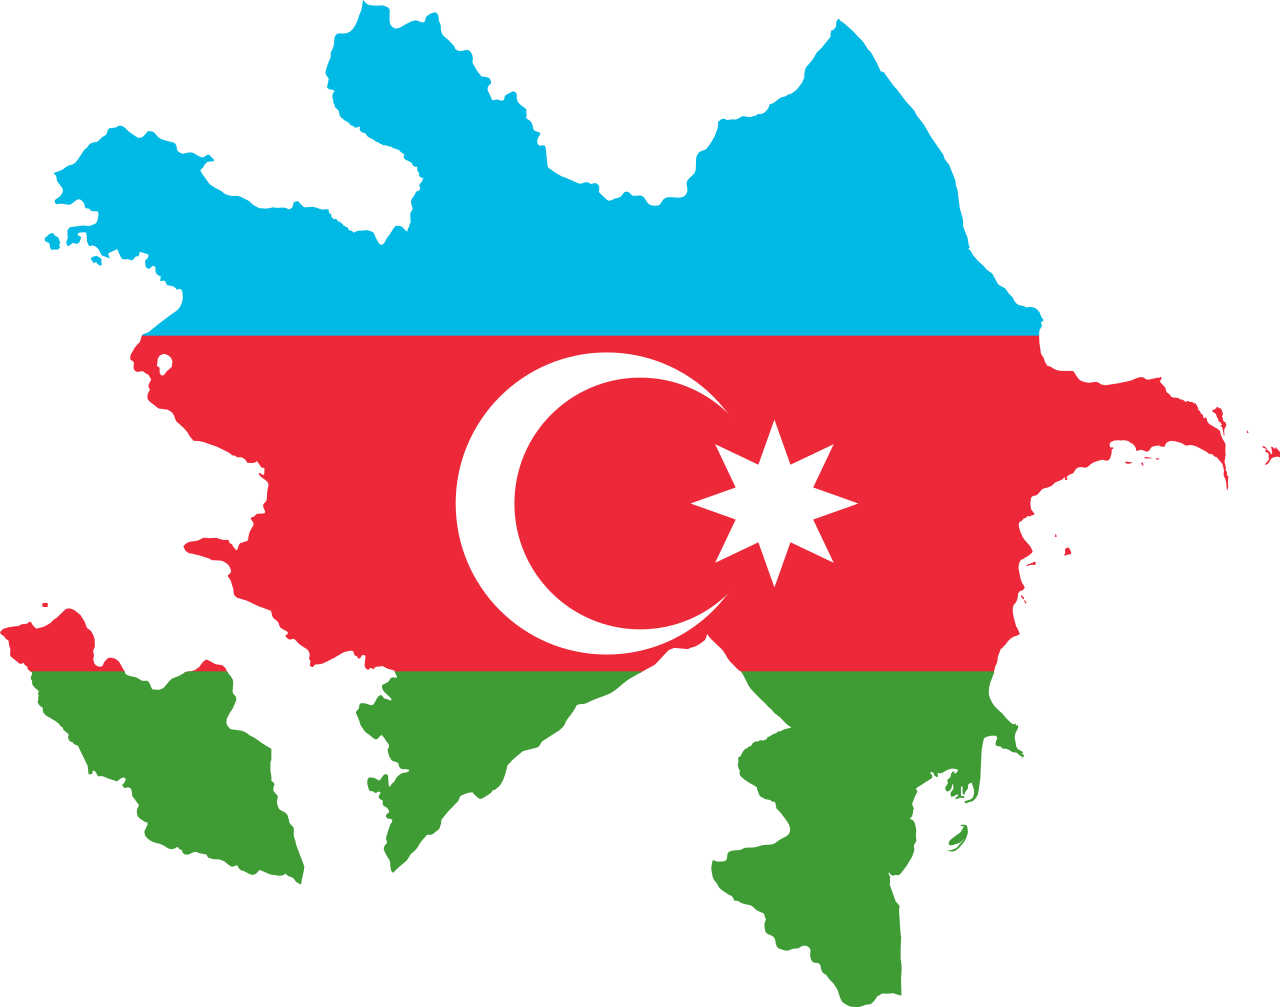 Azerbiajan map